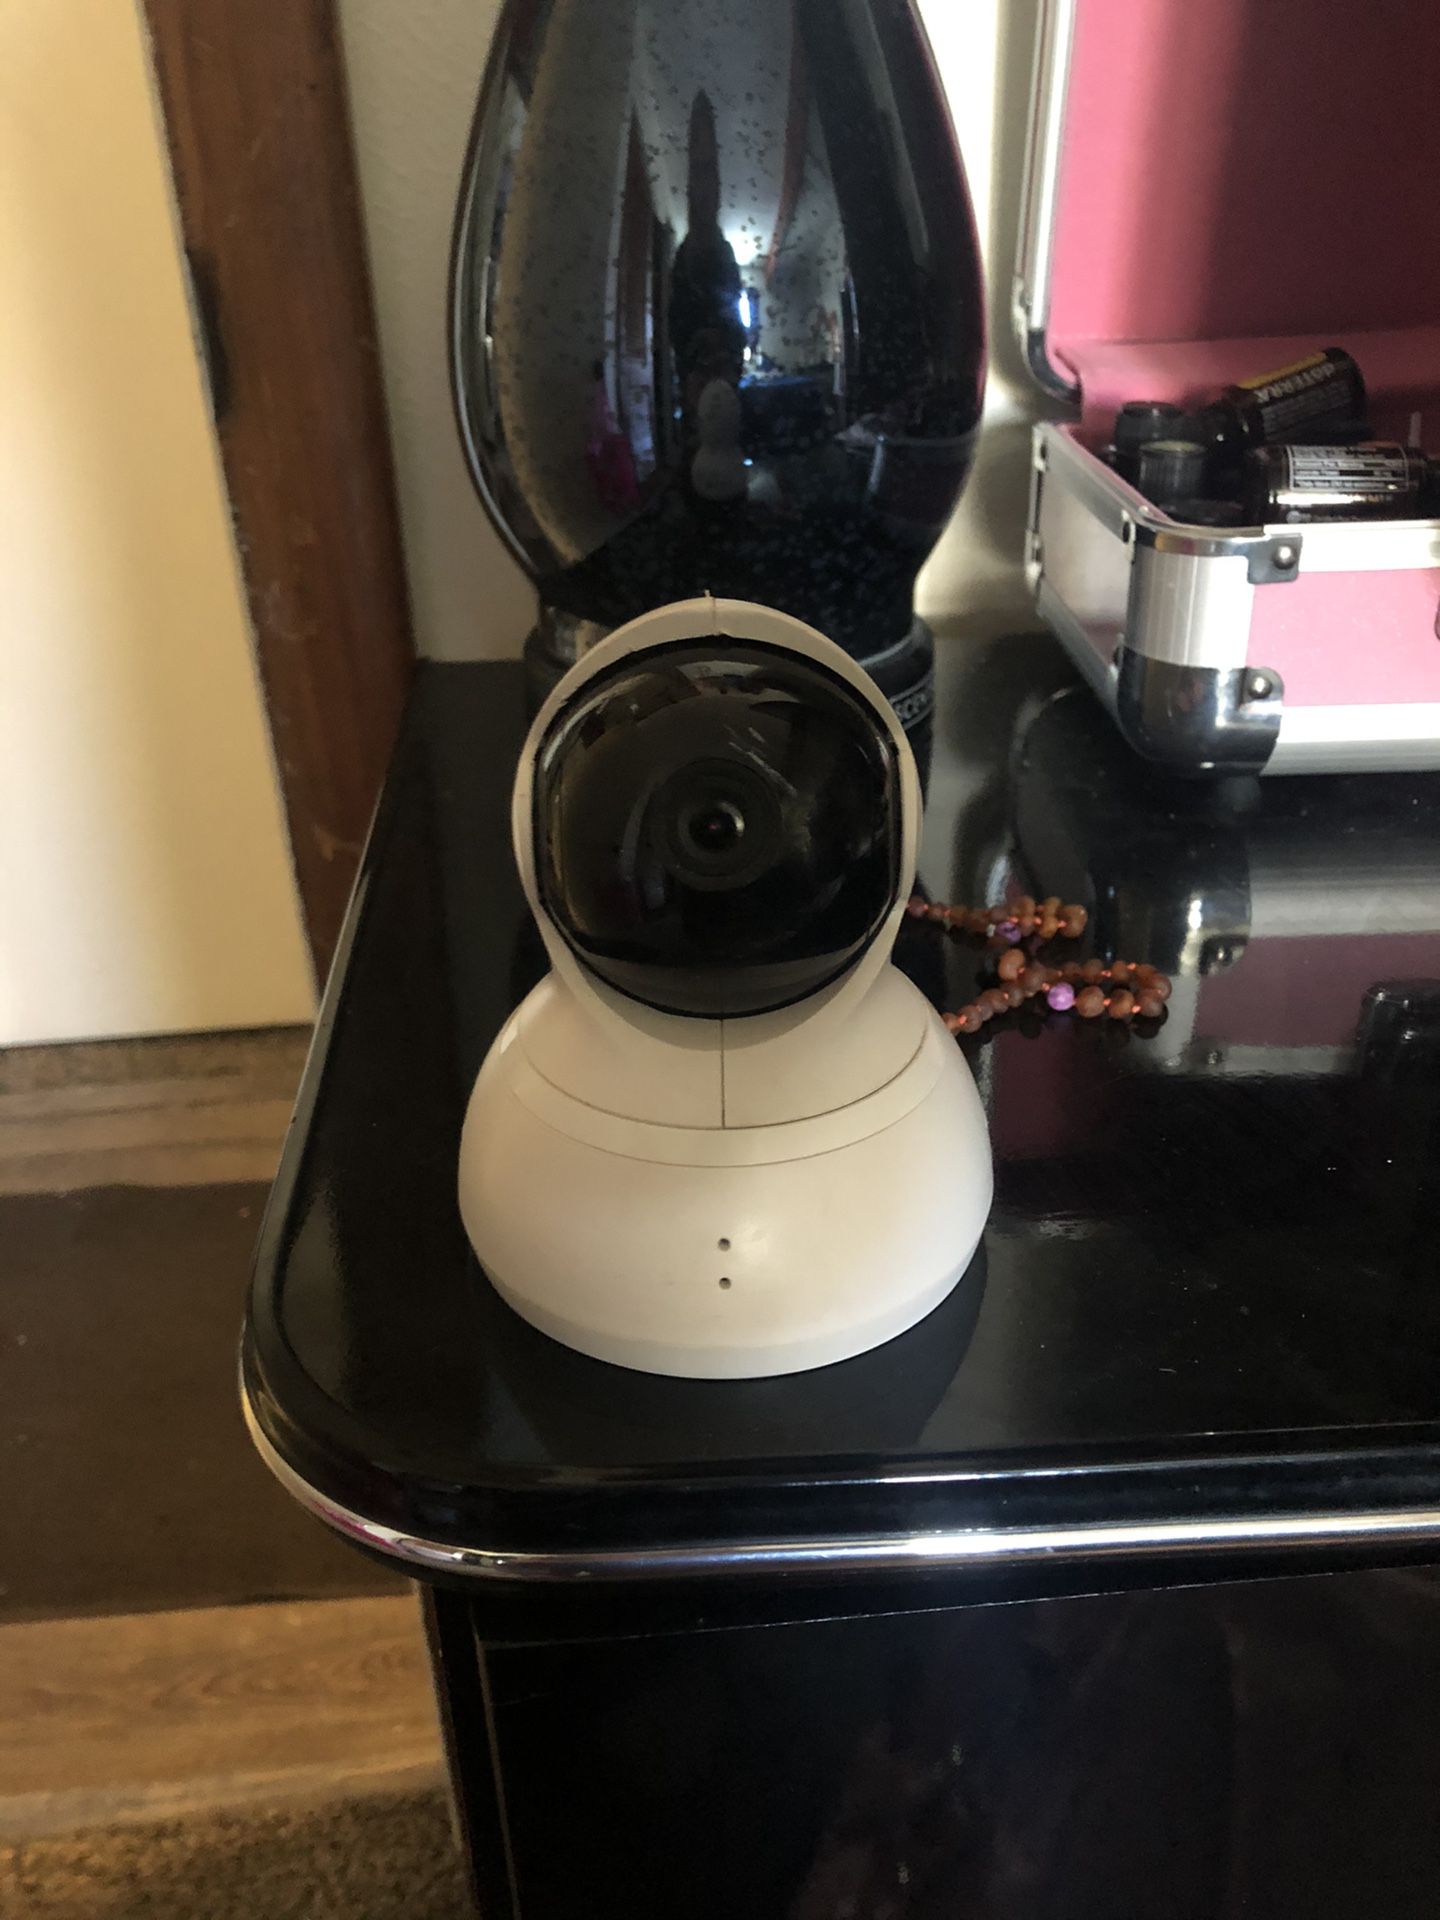 Yi home security camera